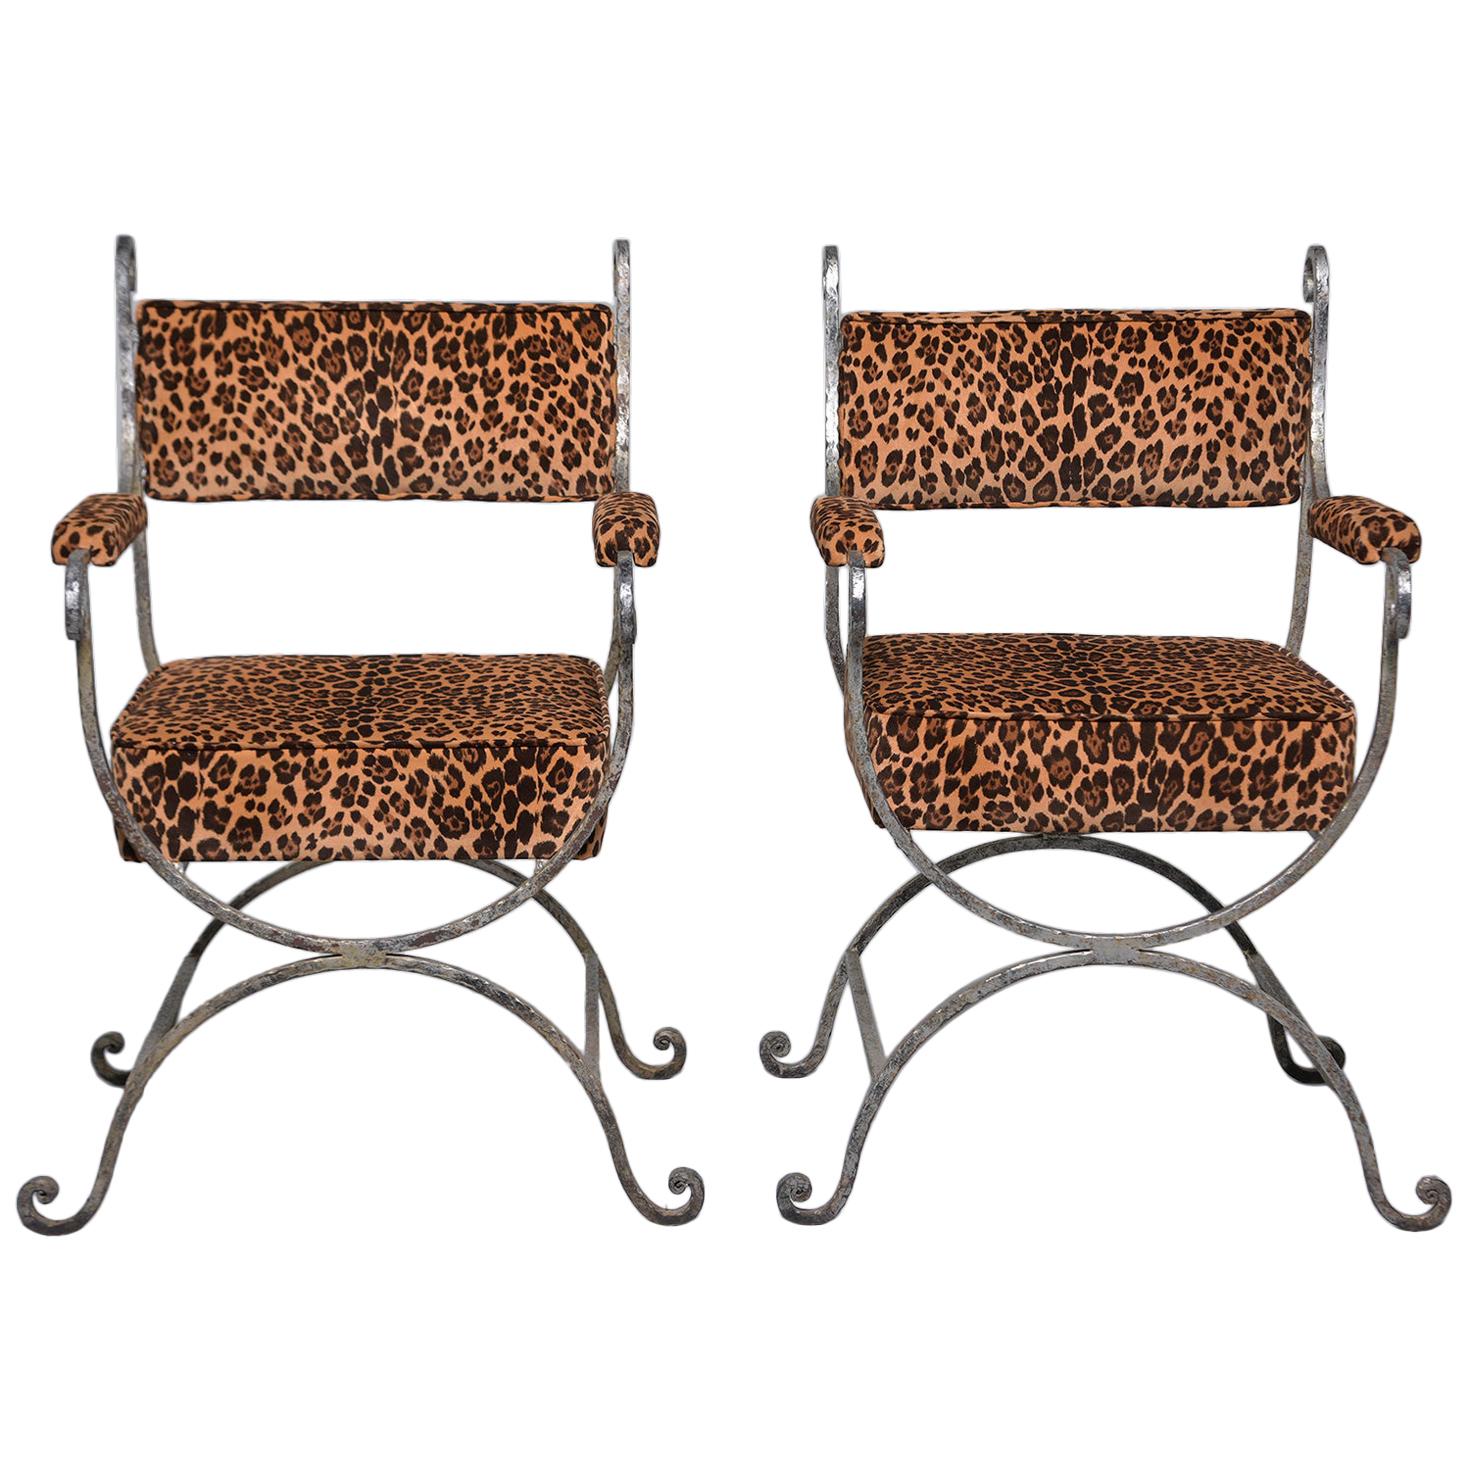 Pair Iron Savonarola Chairs with Leopard Print Upholstery